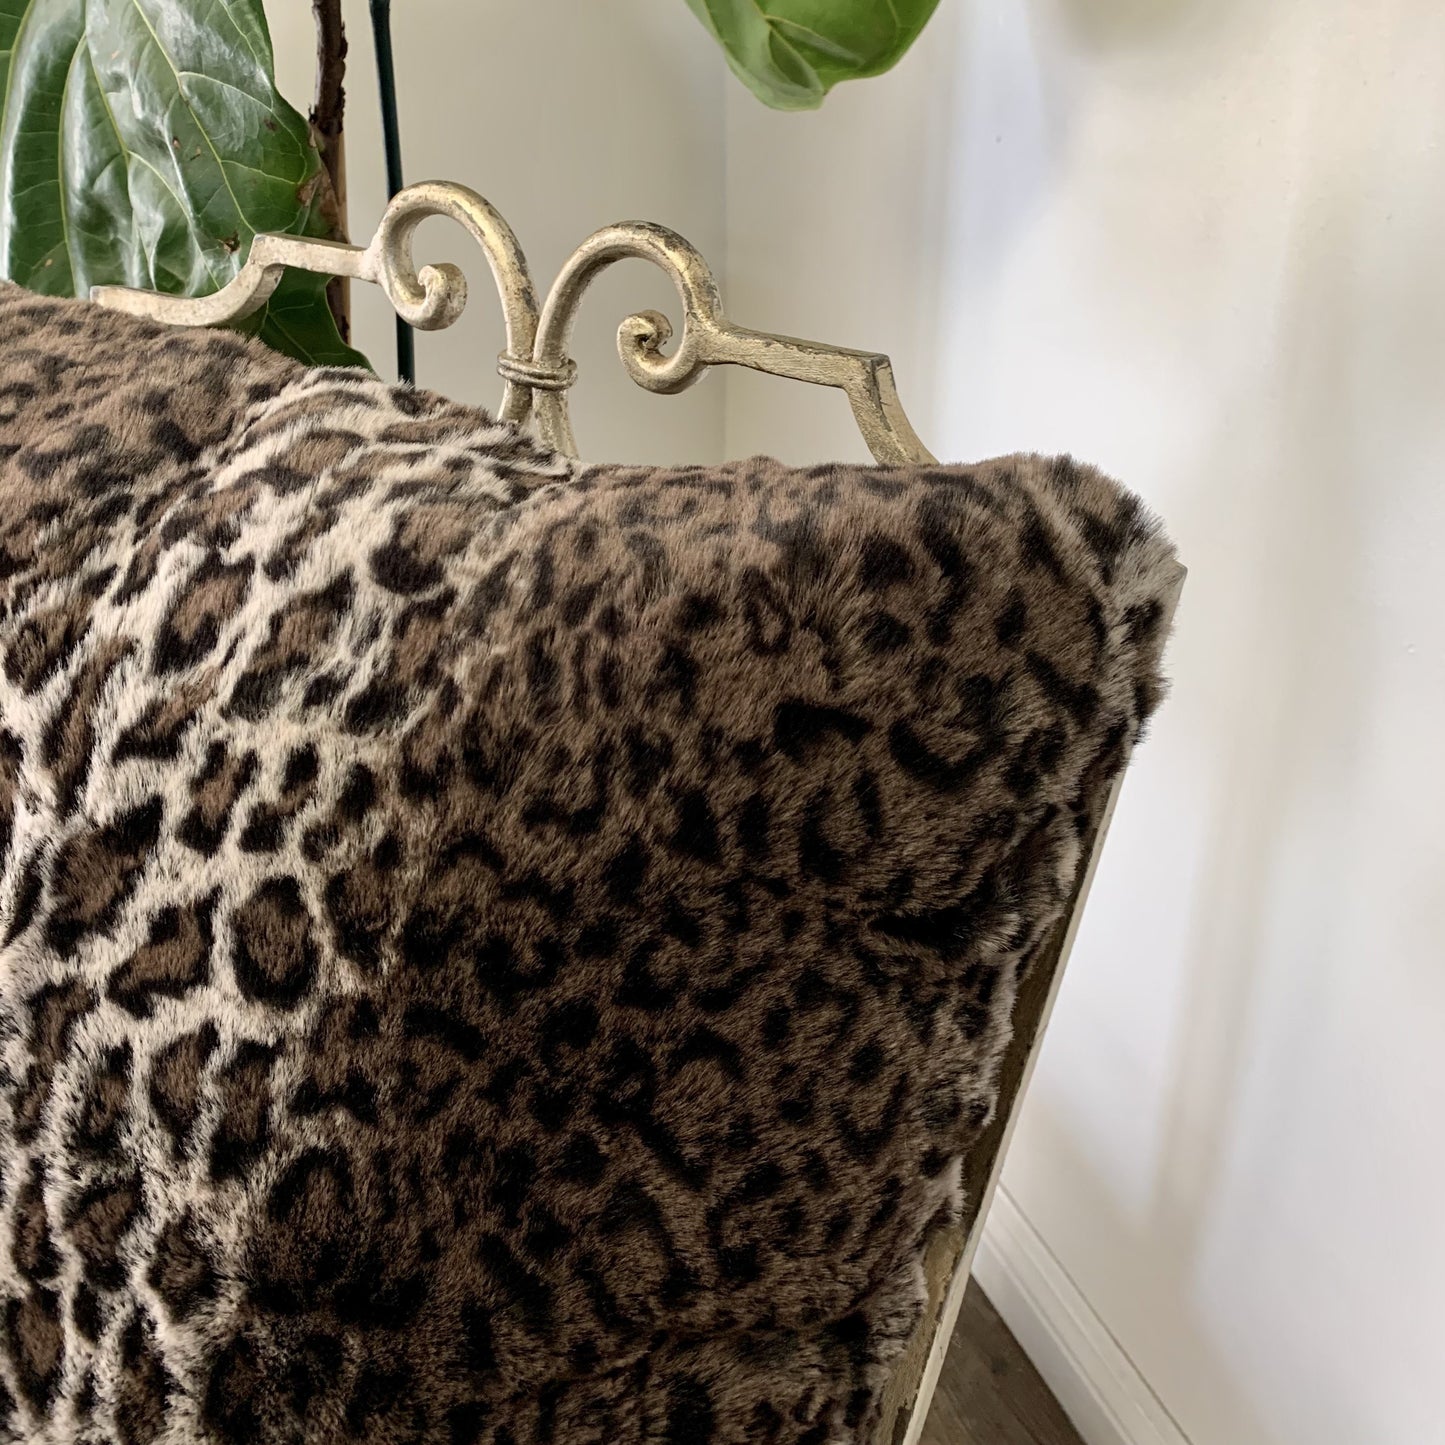 Leopard Cheetah Jaguar Feline Animal Print Soft Cozy Fuzzy Faux Fur Throw Pillow / Positioner